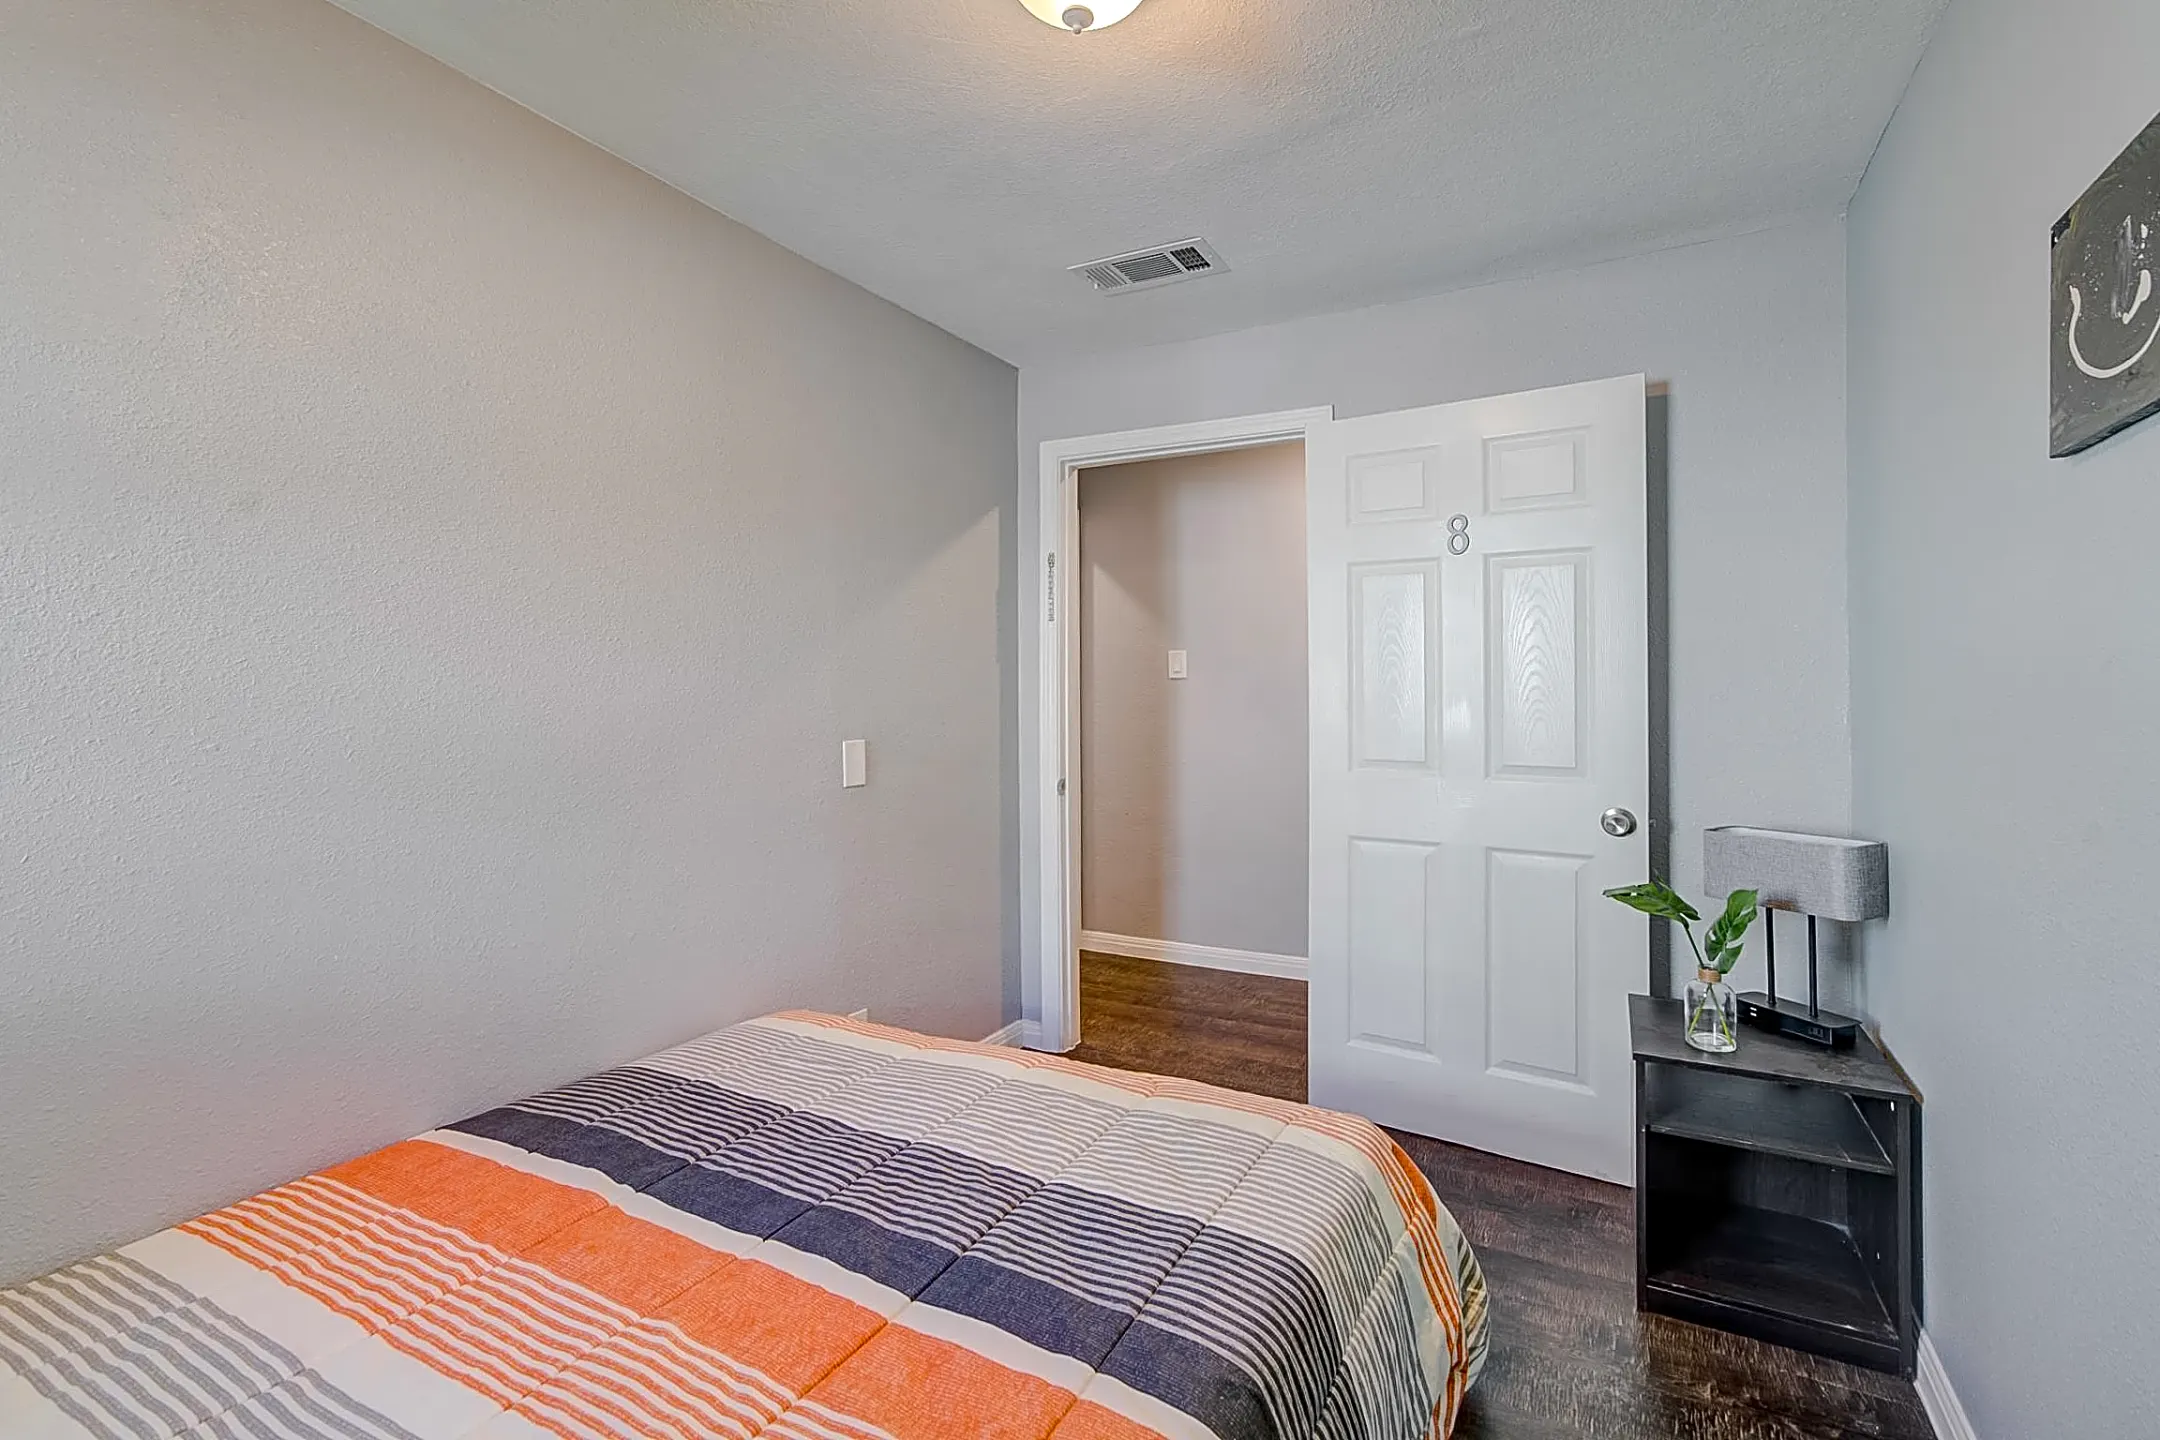 Bedroom - Room For Rent - Houston, TX